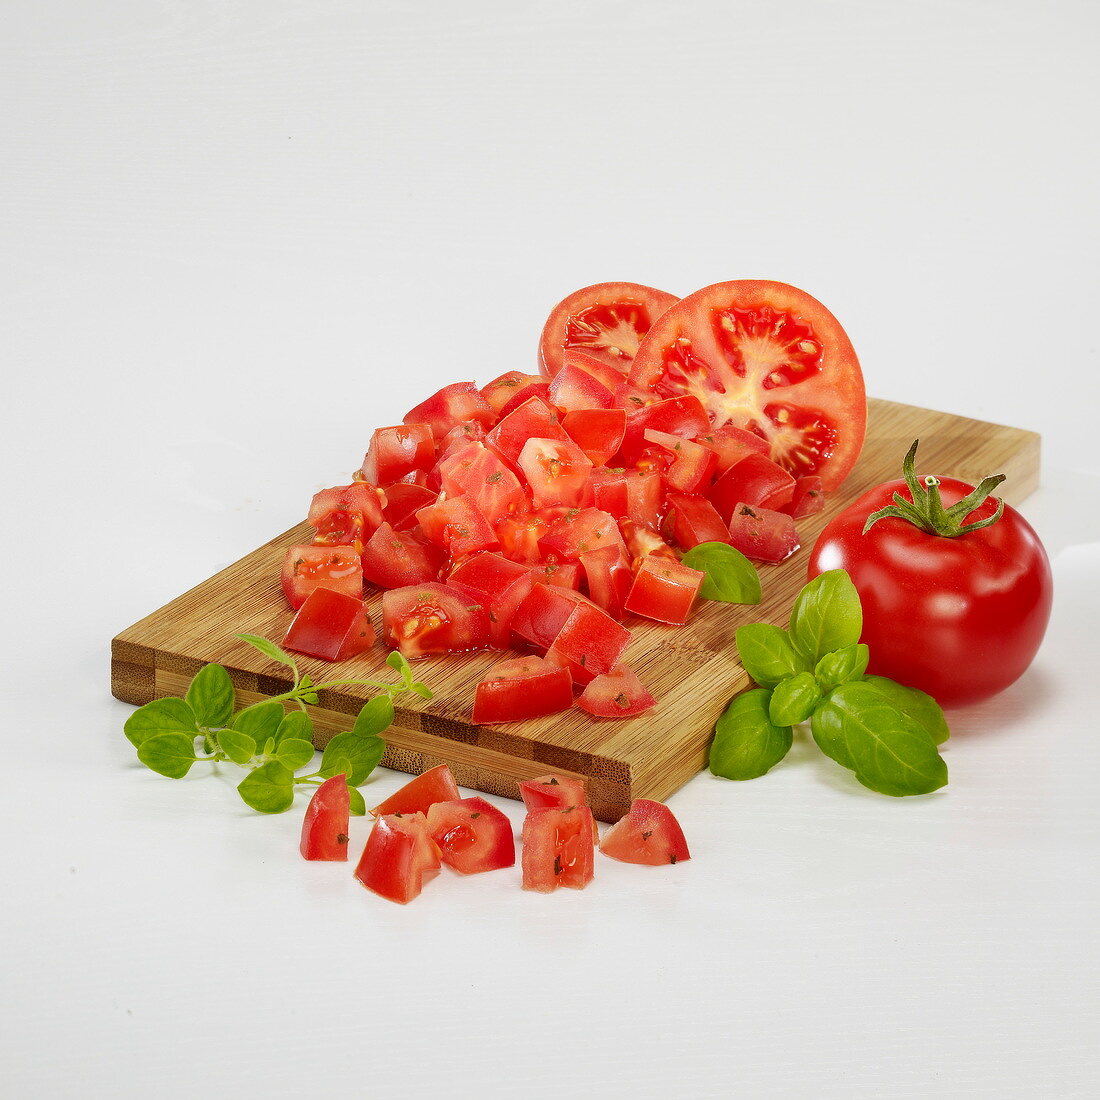 Dicing tomatoes